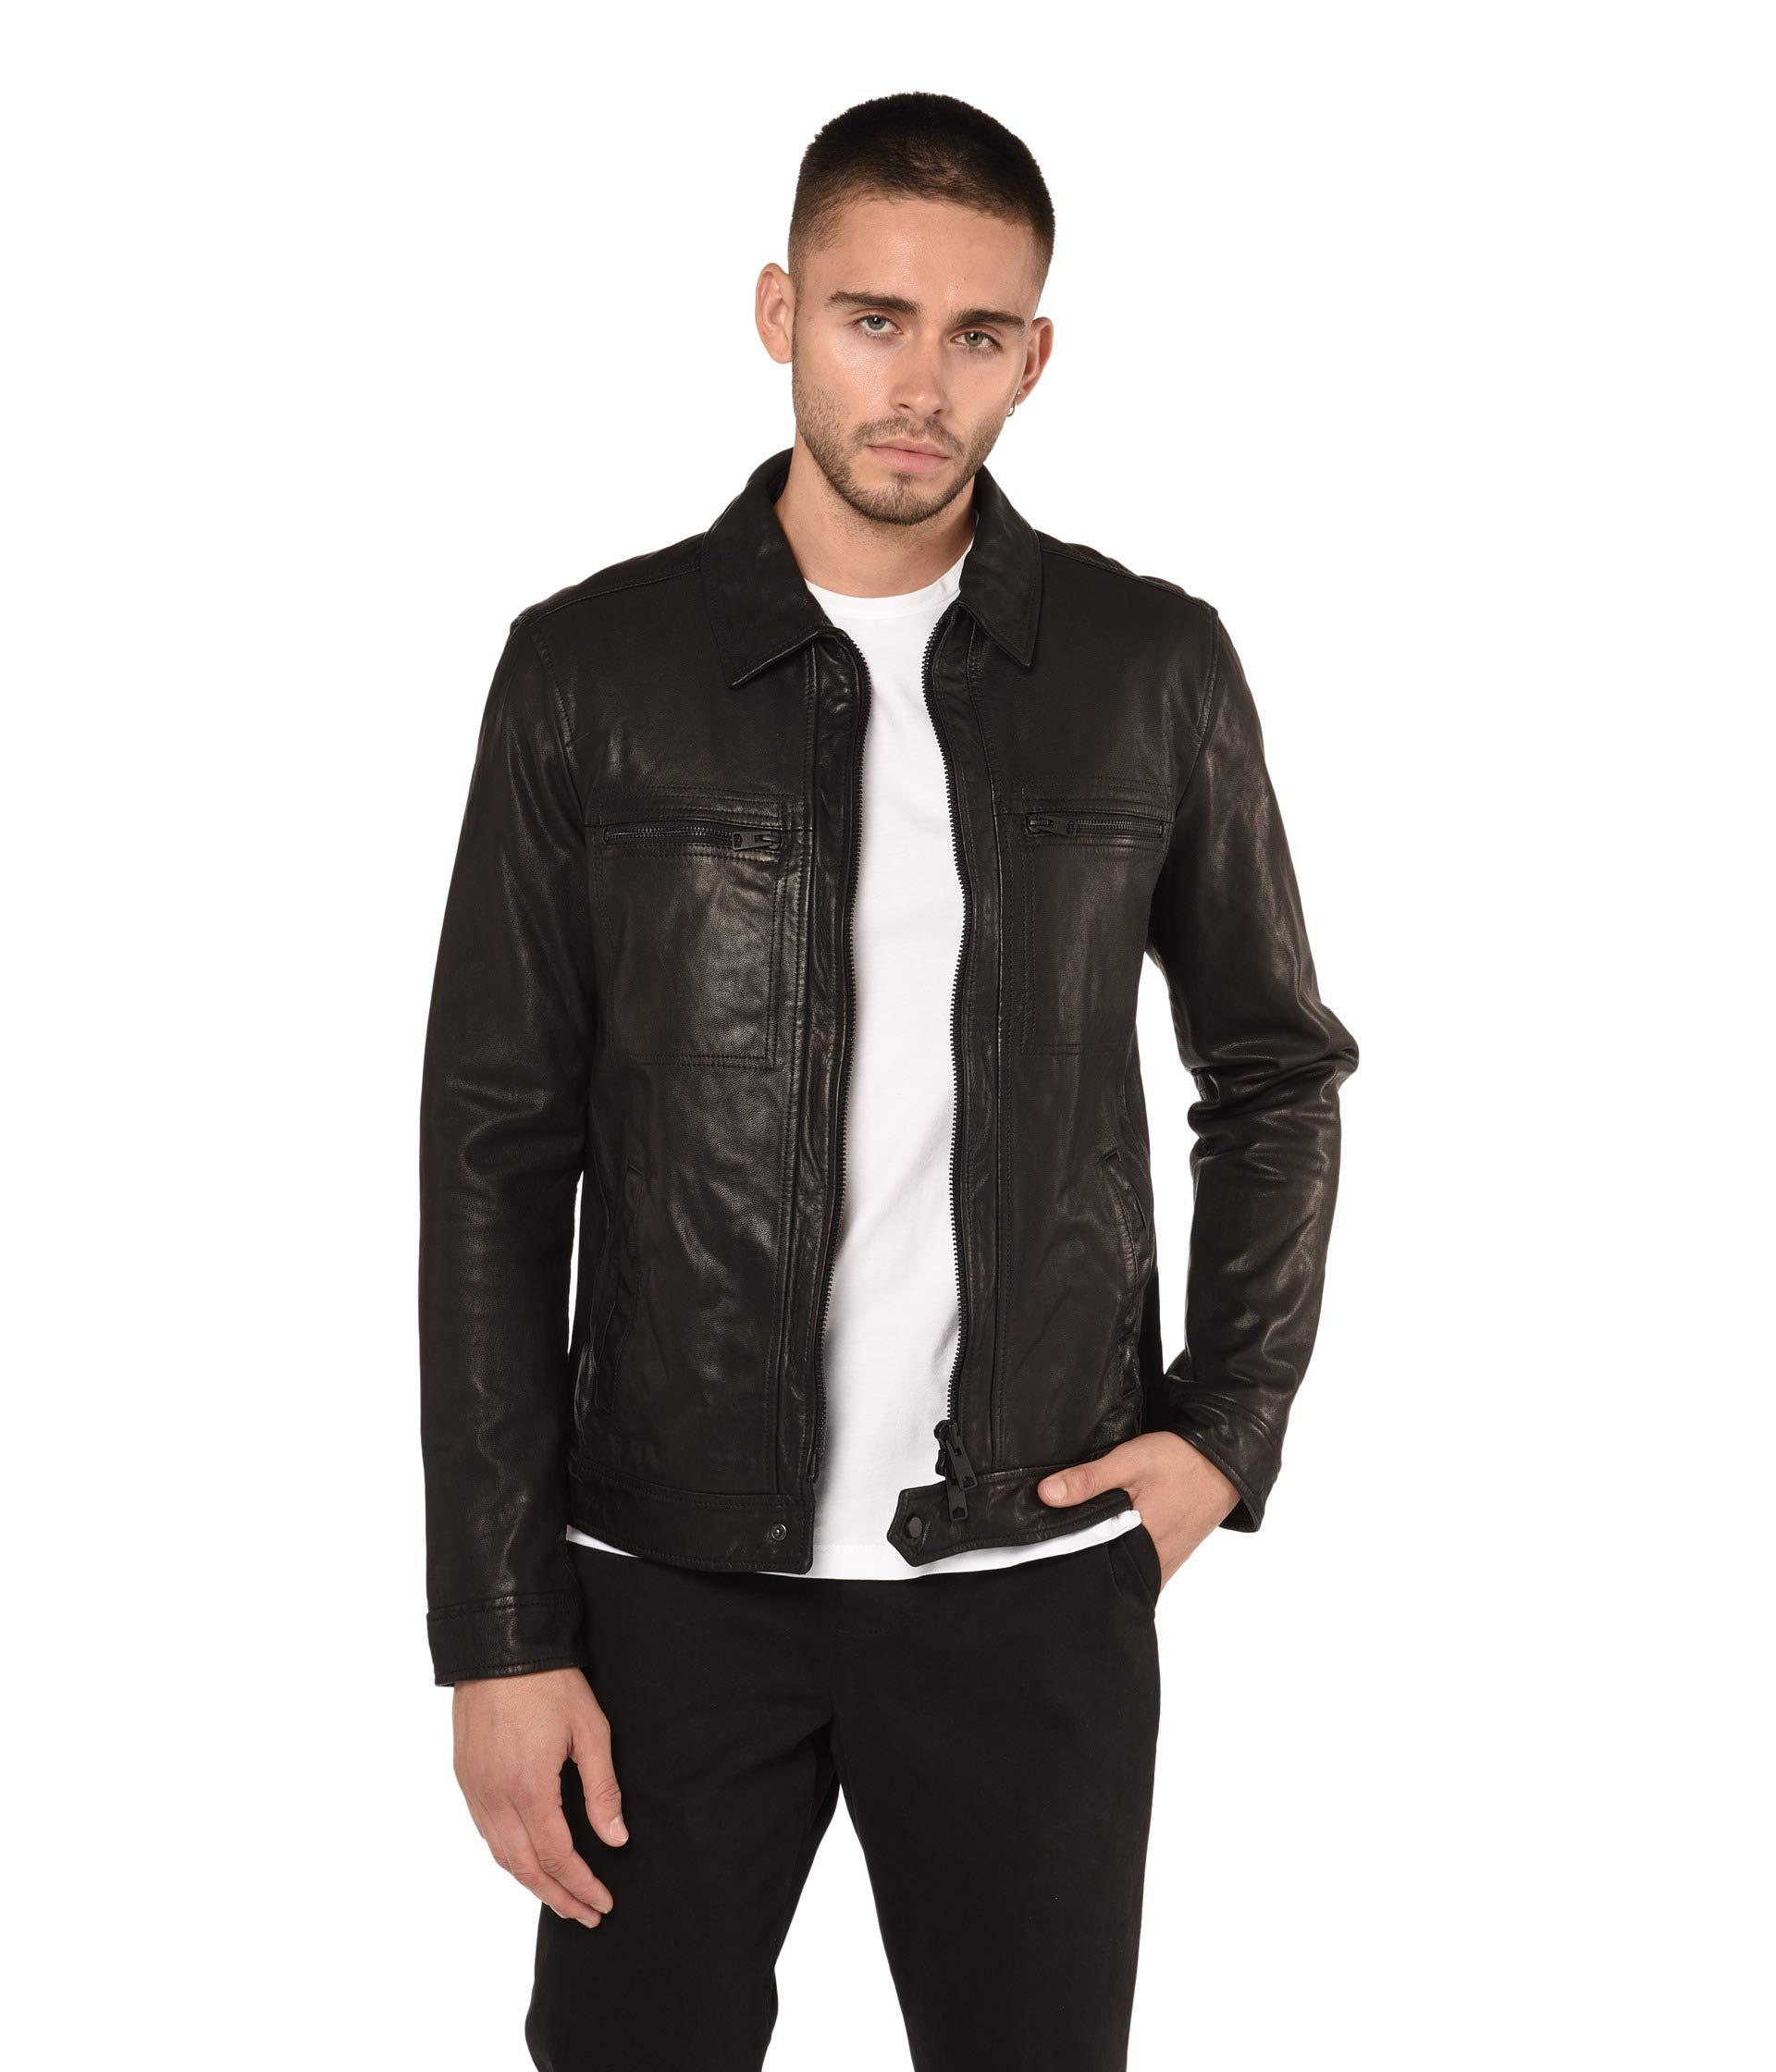 AllSaints Lark Leather Jacket in Black for Men - Lyst